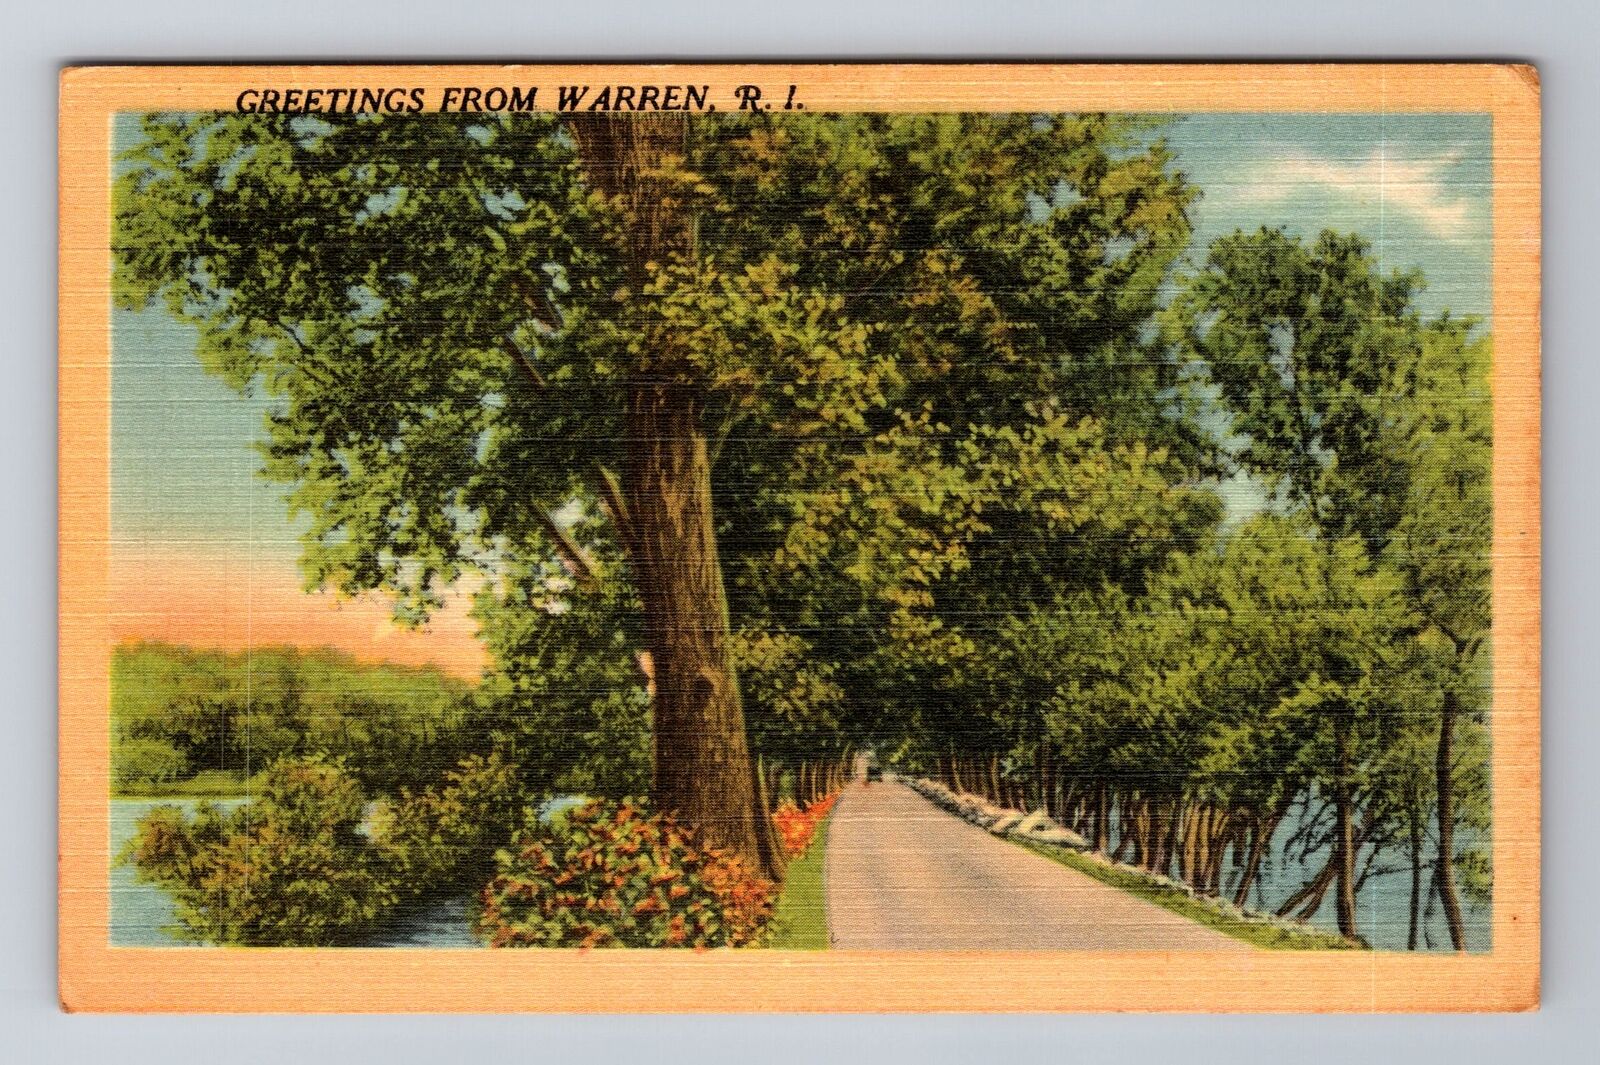 Warren RI-Rhode Island, Scenic Road Greetings, Antique Souvenir Vintage Postcard